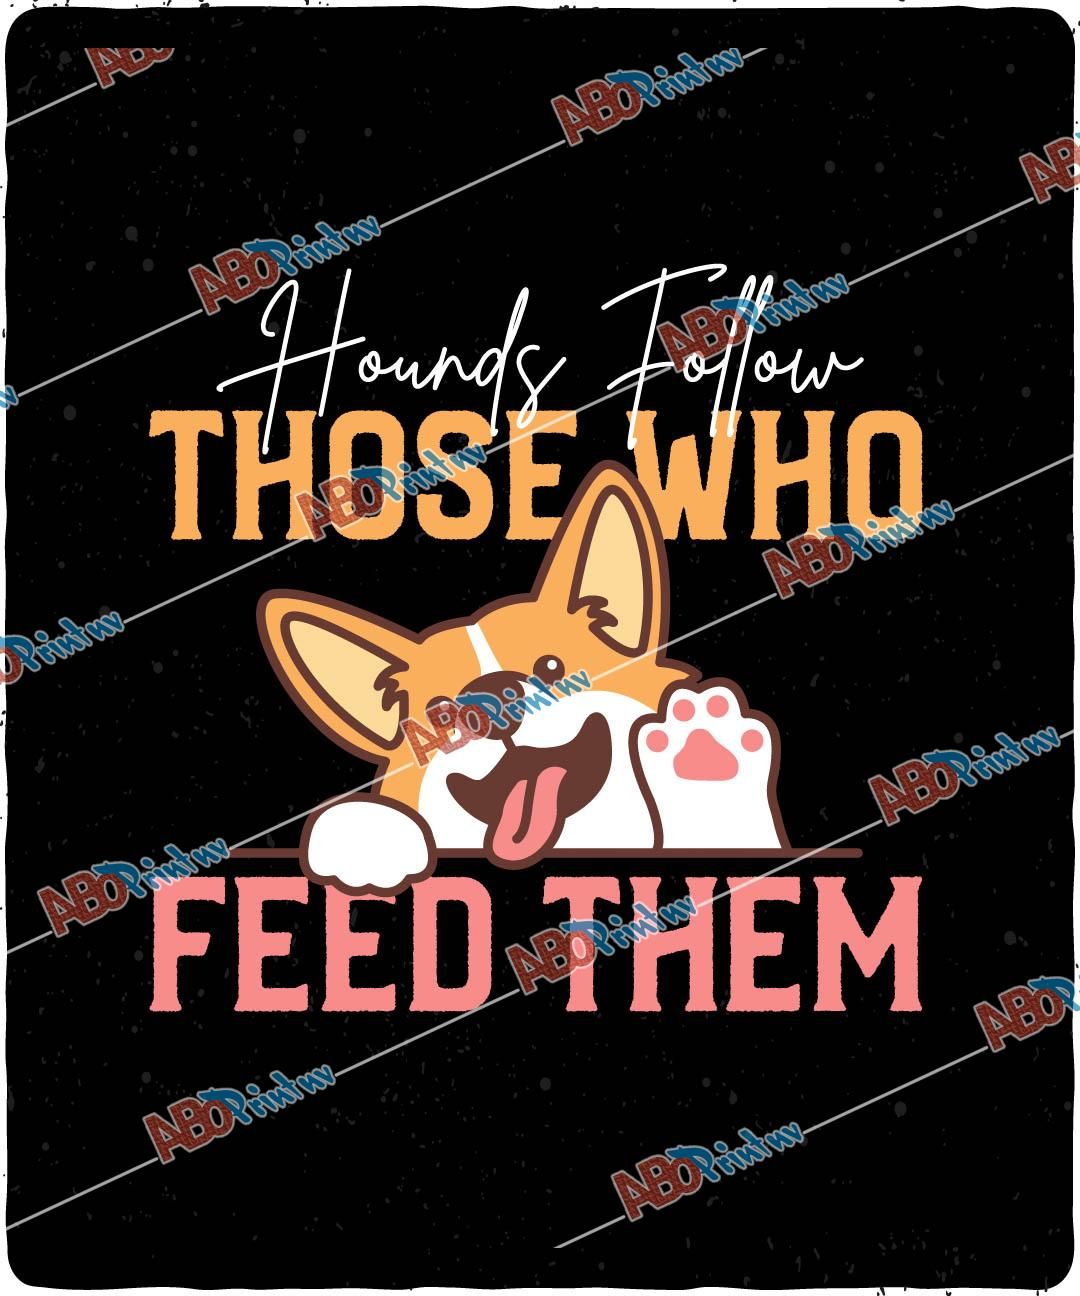 Hounds follow those who feed themJPG (1).jpg